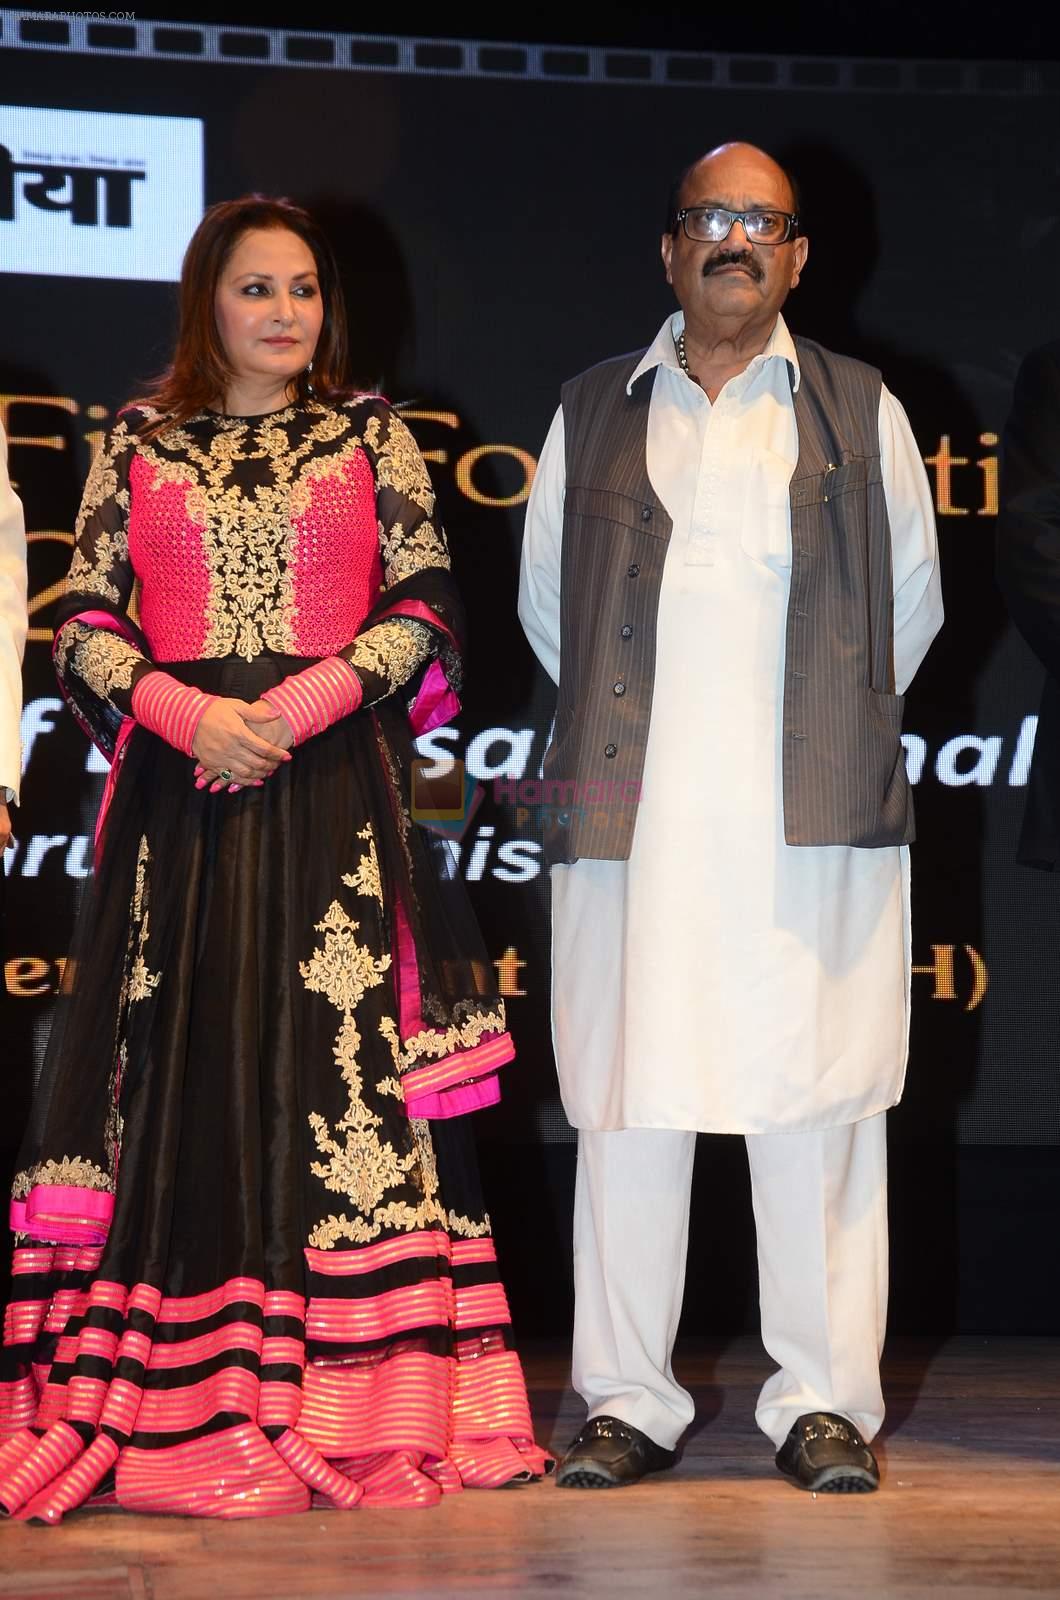 Jaya Prada, Amar Singh at Dadasaheb Phalke Film Foundation Award in Bhaidas Hall on 21st April 2015